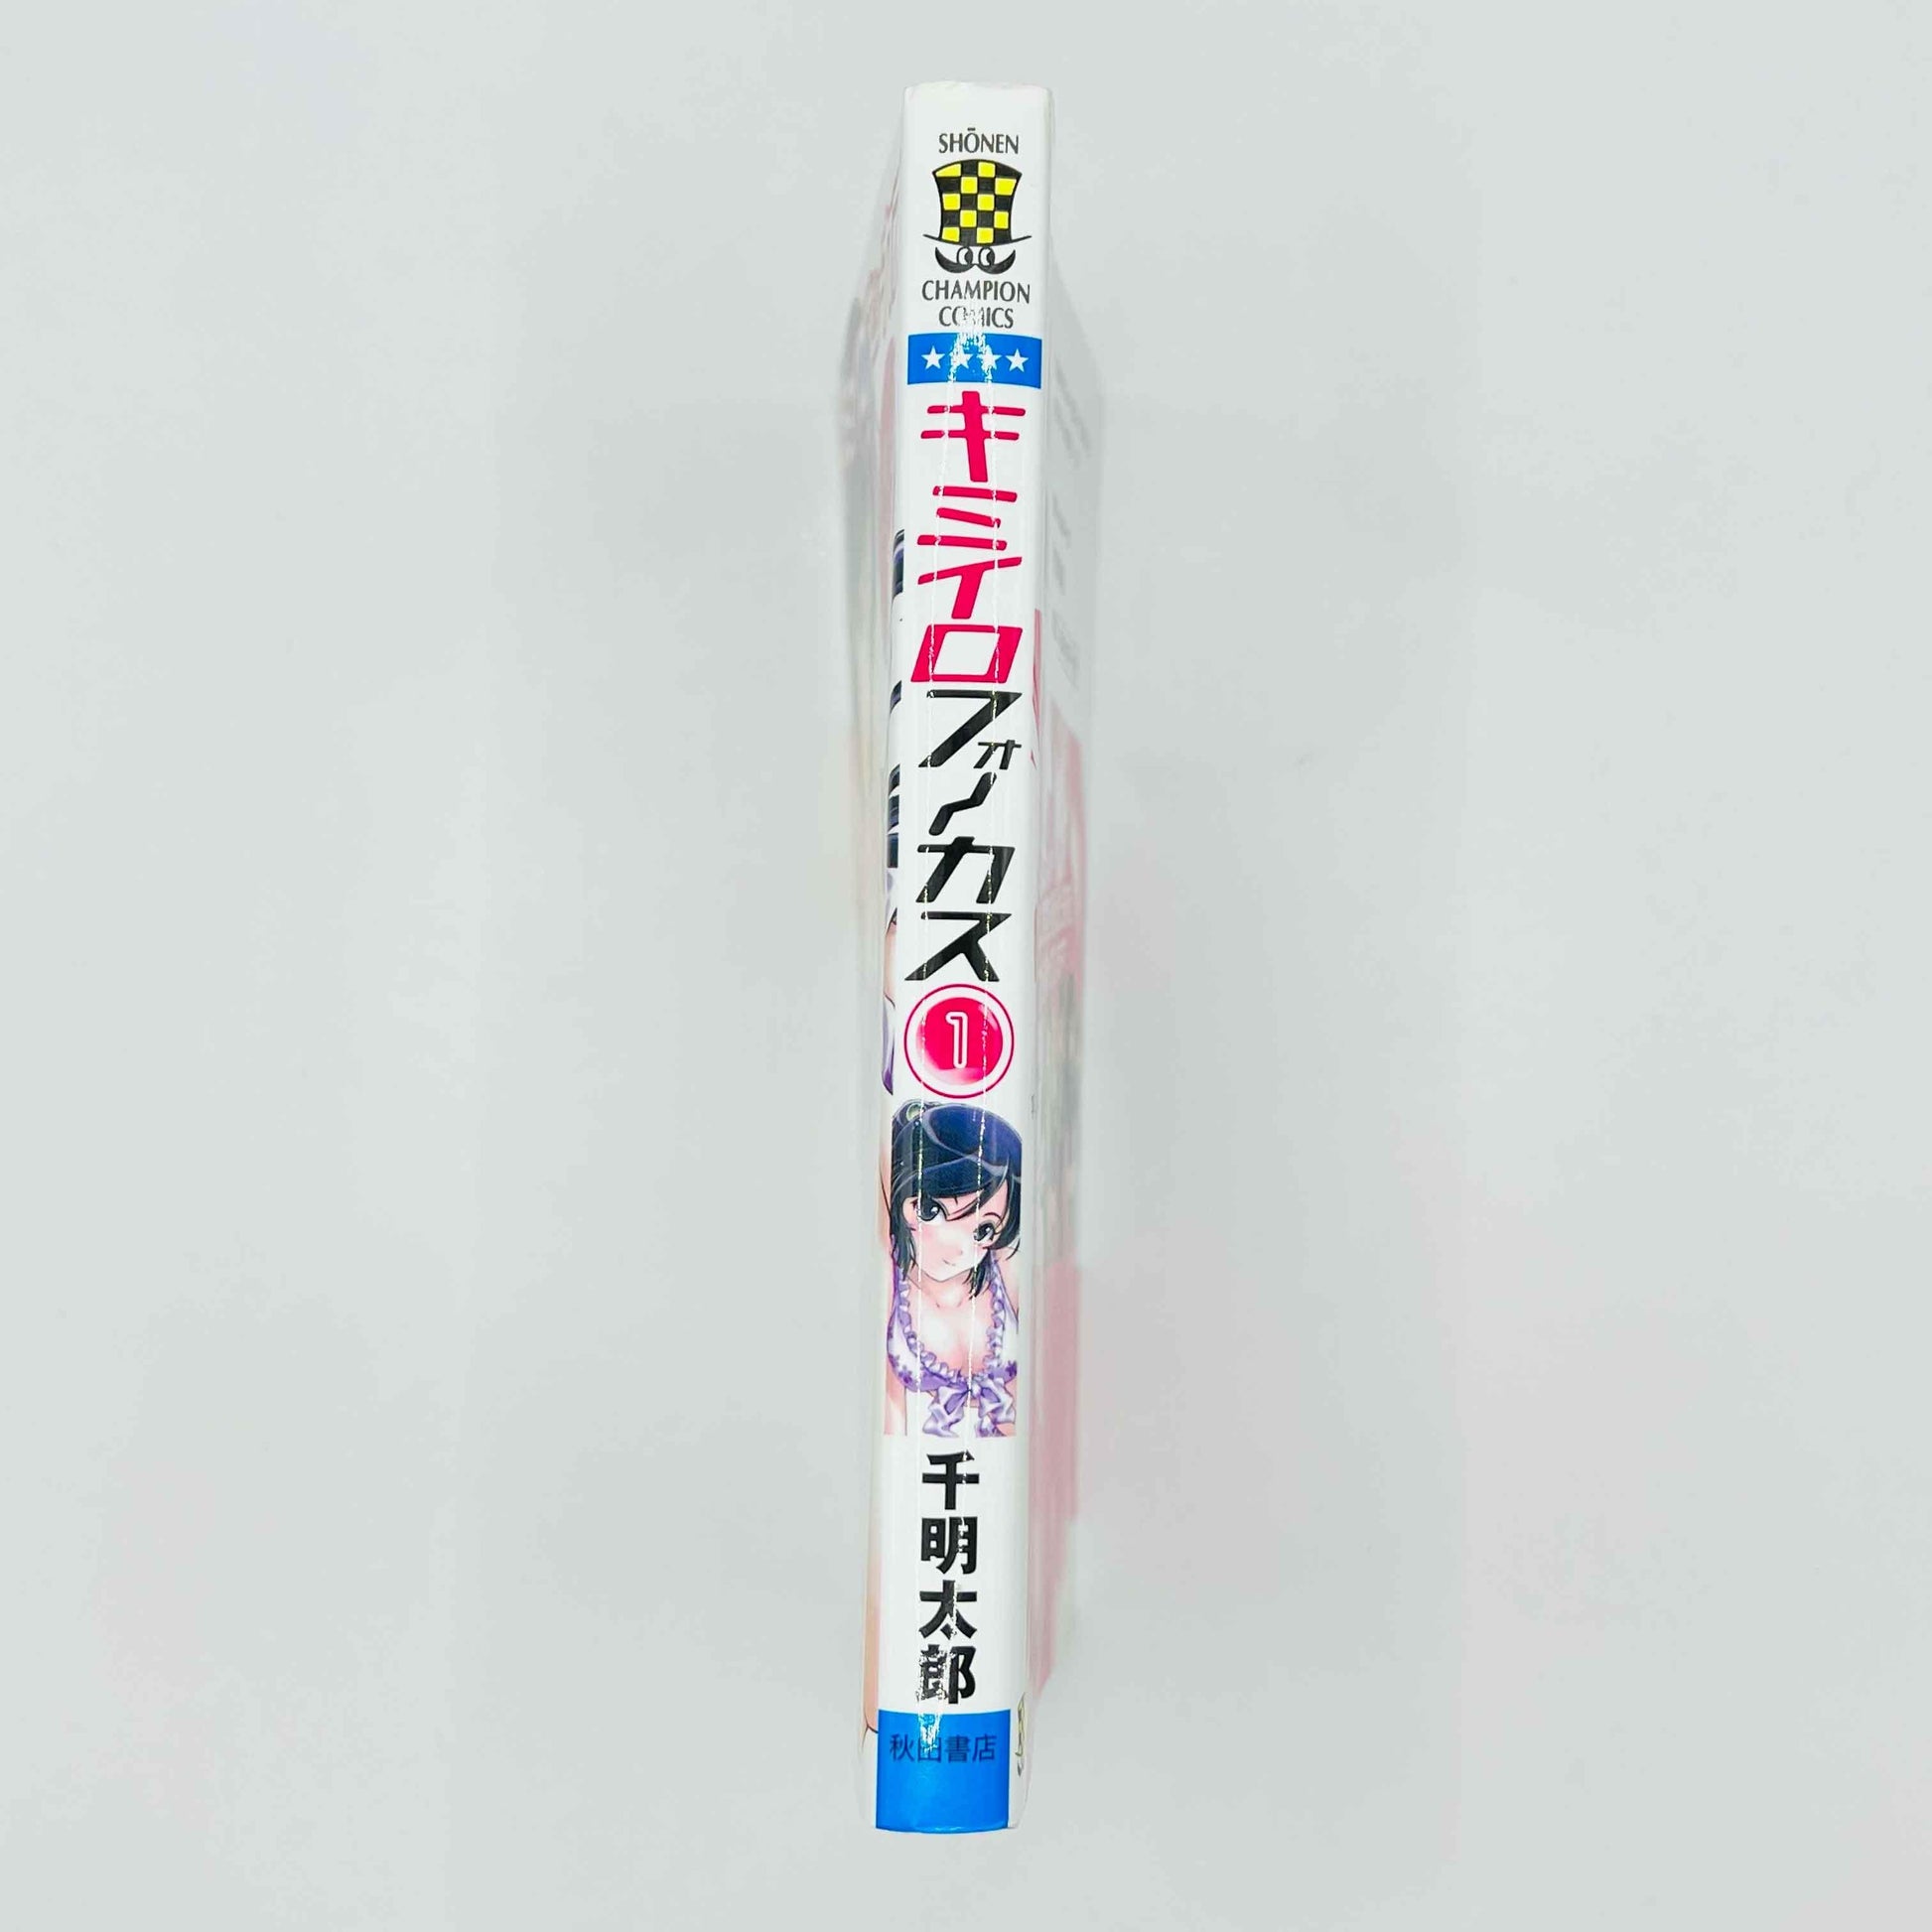 Kimiiro Focus - I Focus on Your Color - Volume 01 - 1stPrint.net - 1st First Print Edition Manga Store - M-KIMIFOCUS-01-001